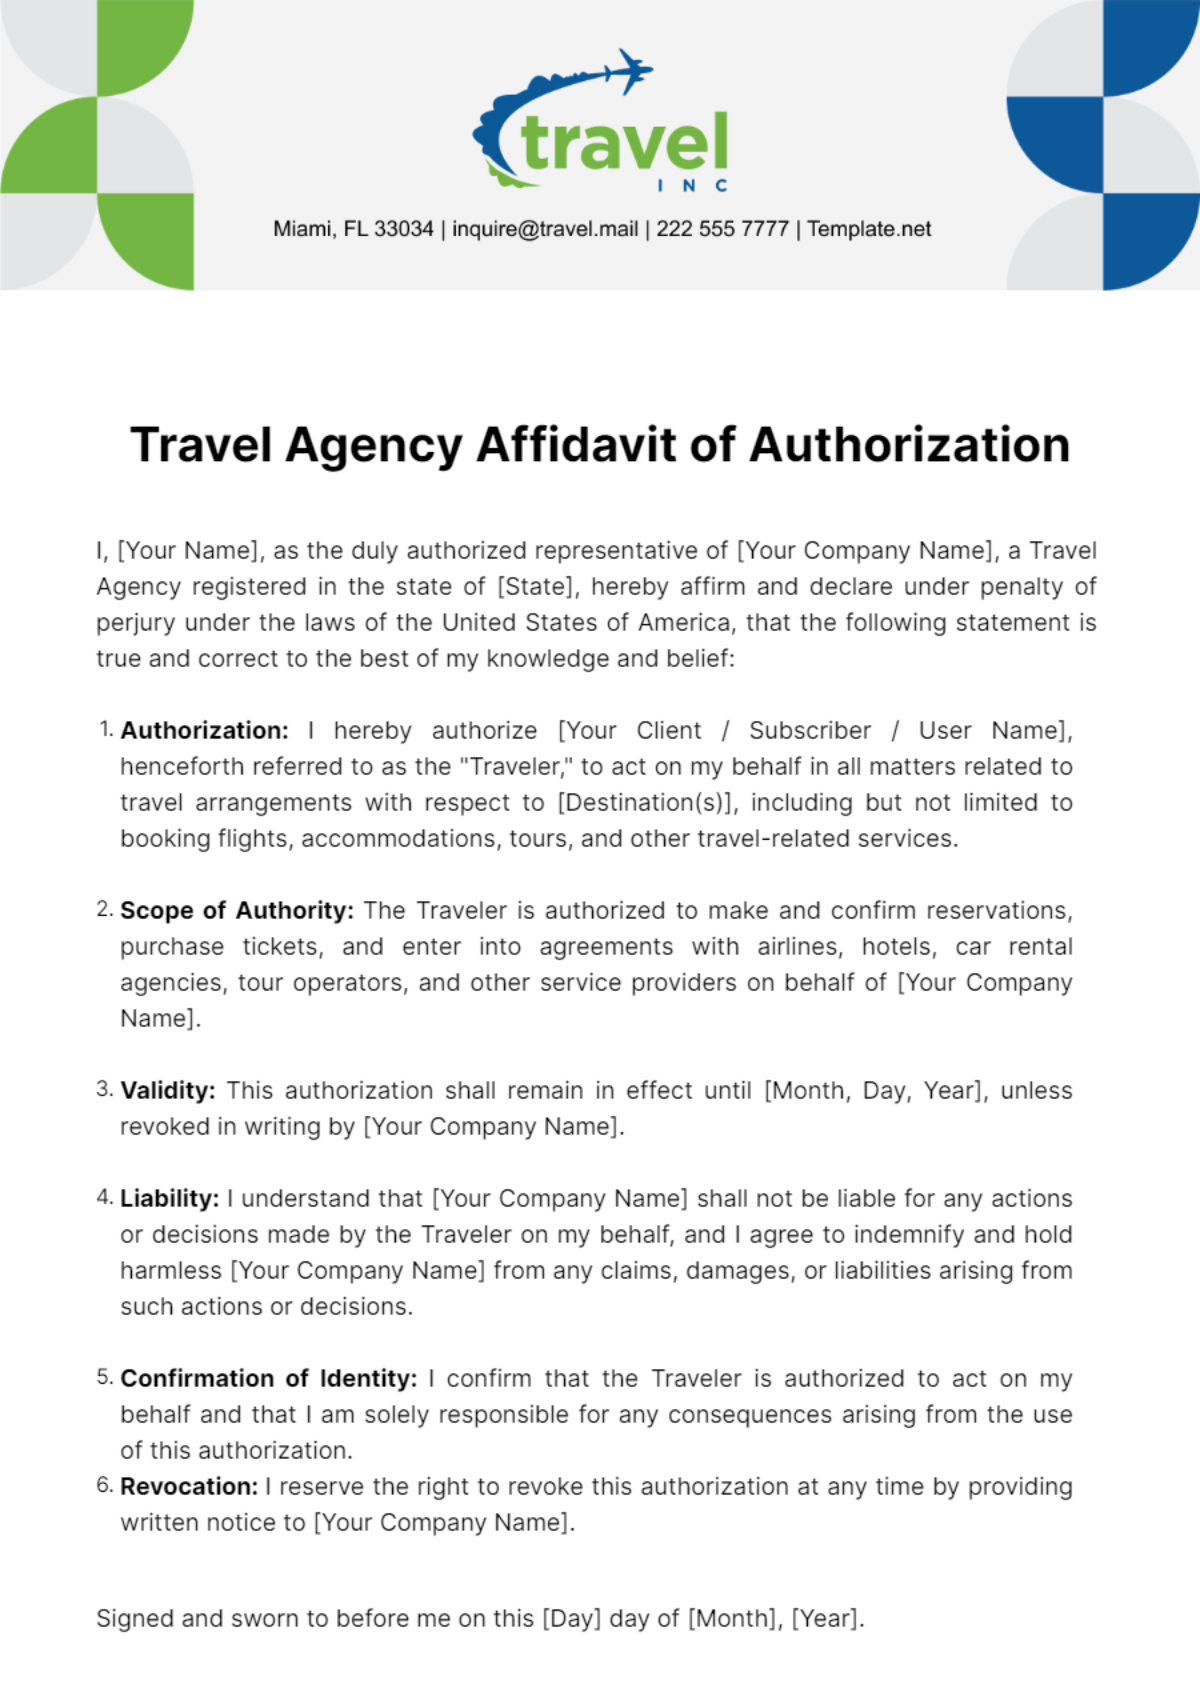 Travel Agency Affidavit of Authorization Template